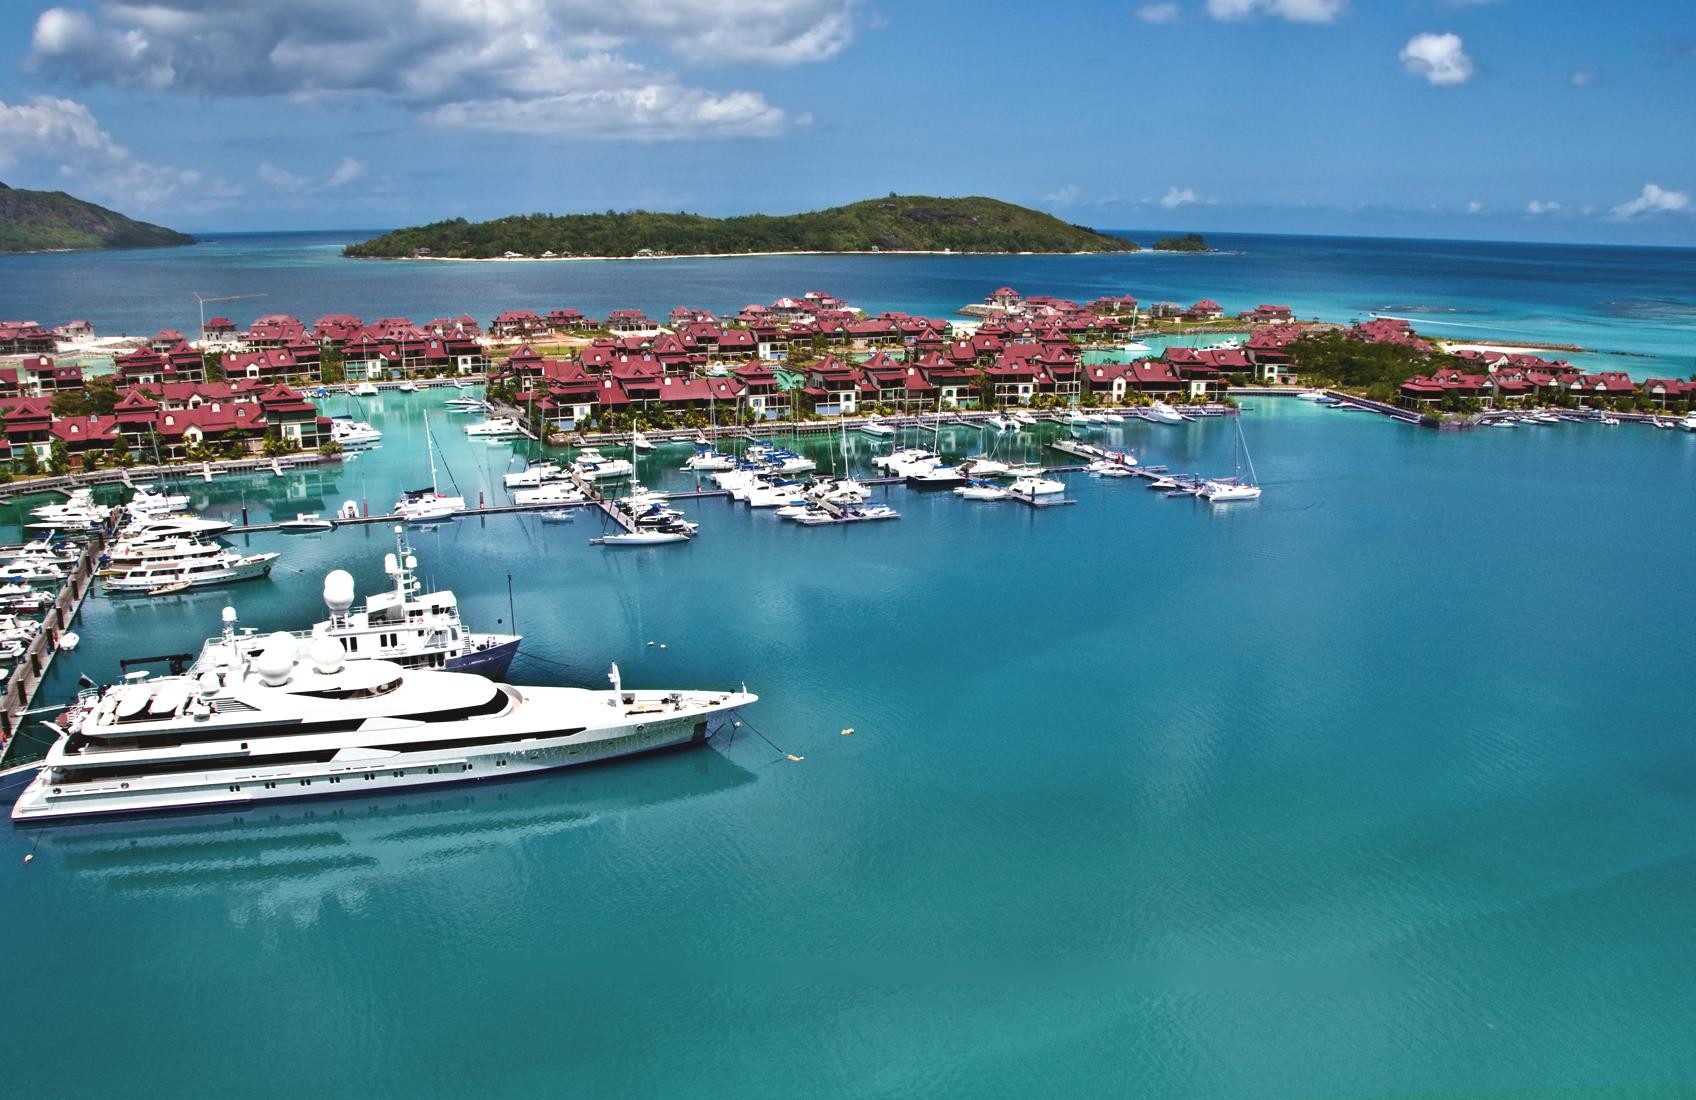 Eden Island Marina is a beautiful Seychelles yacht charter destination nestled in the Indian Ocean